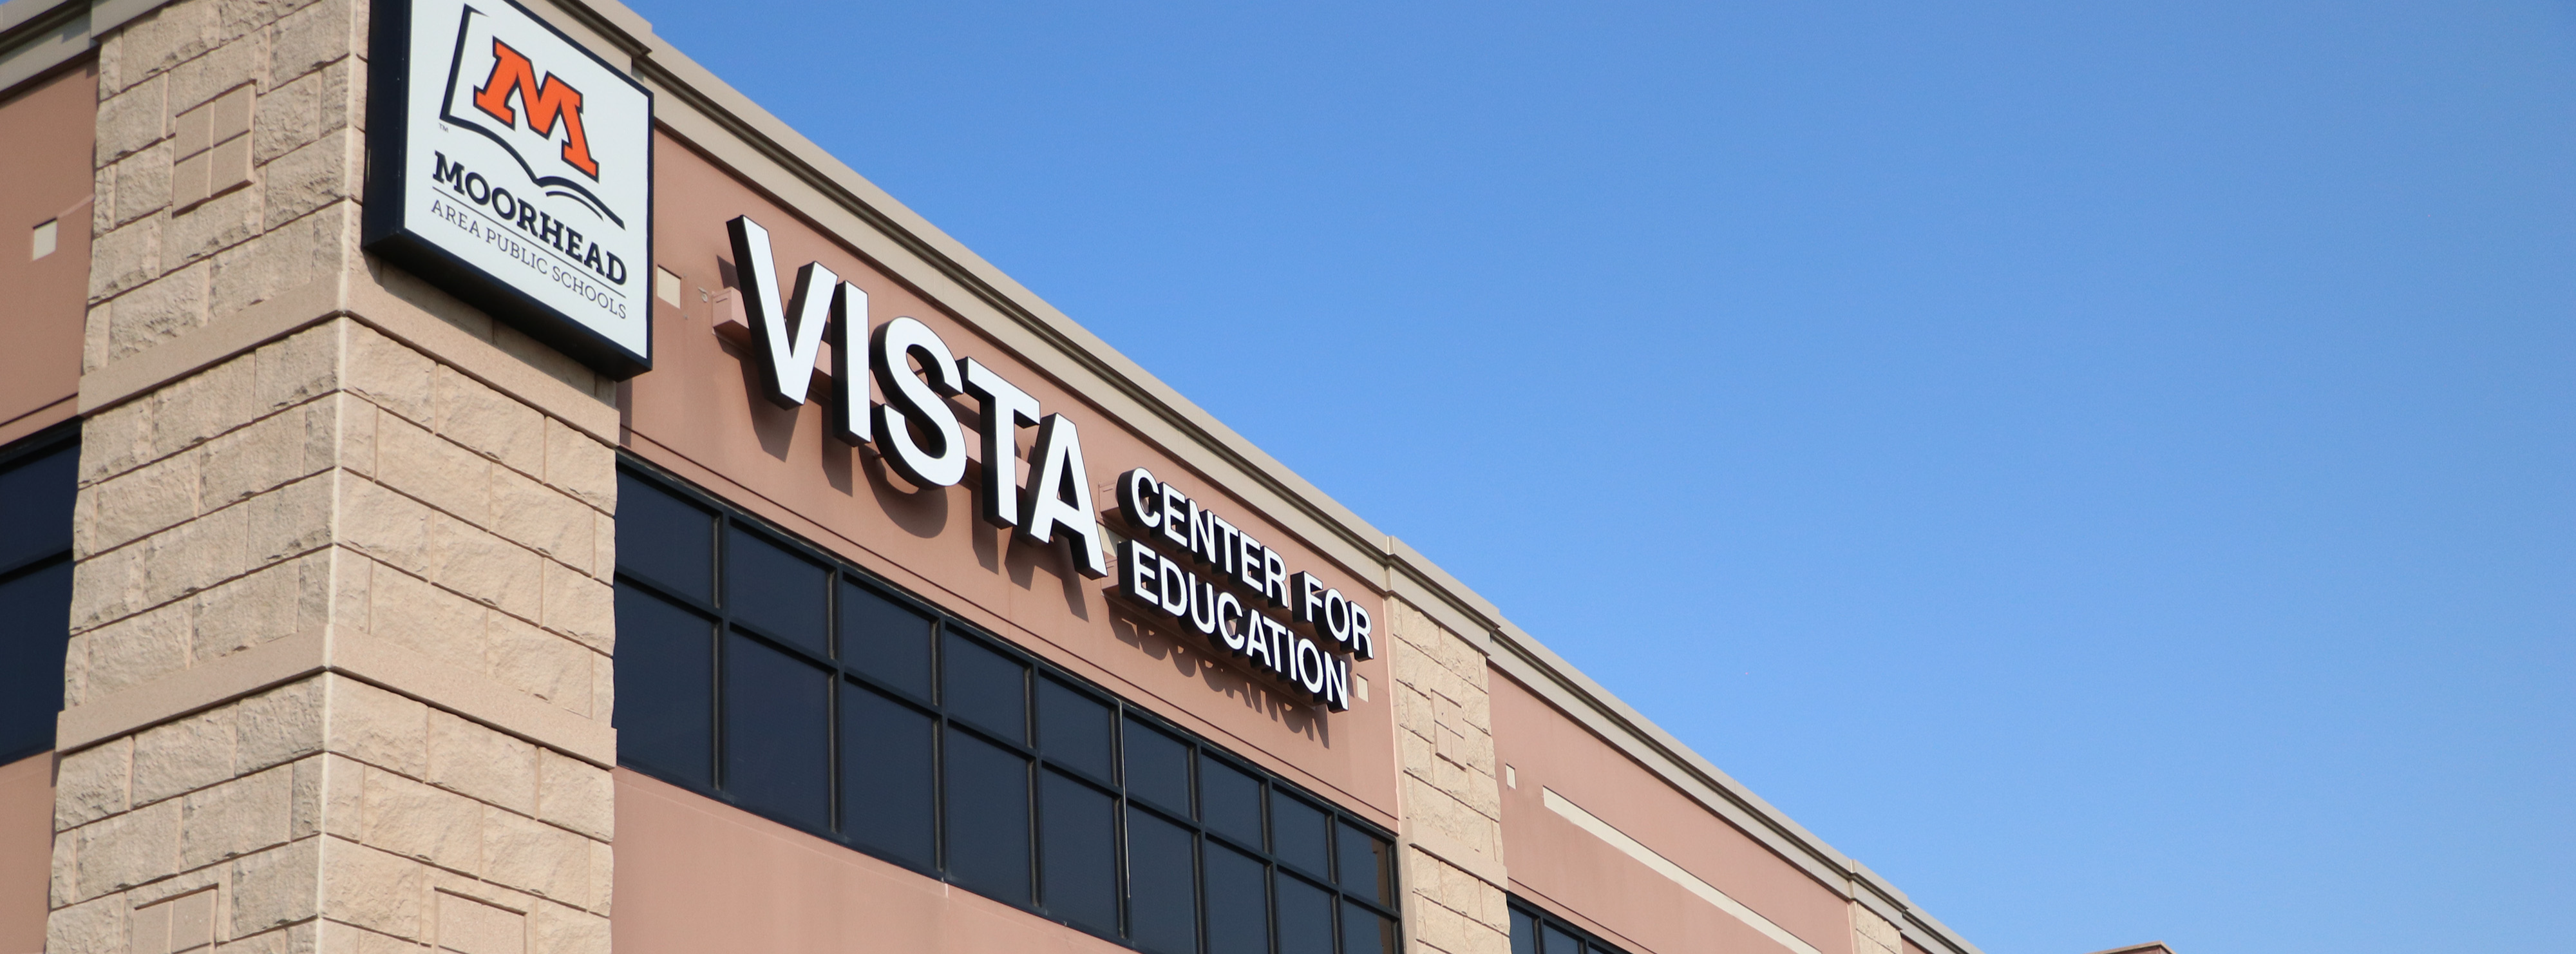 Vista Center for Education